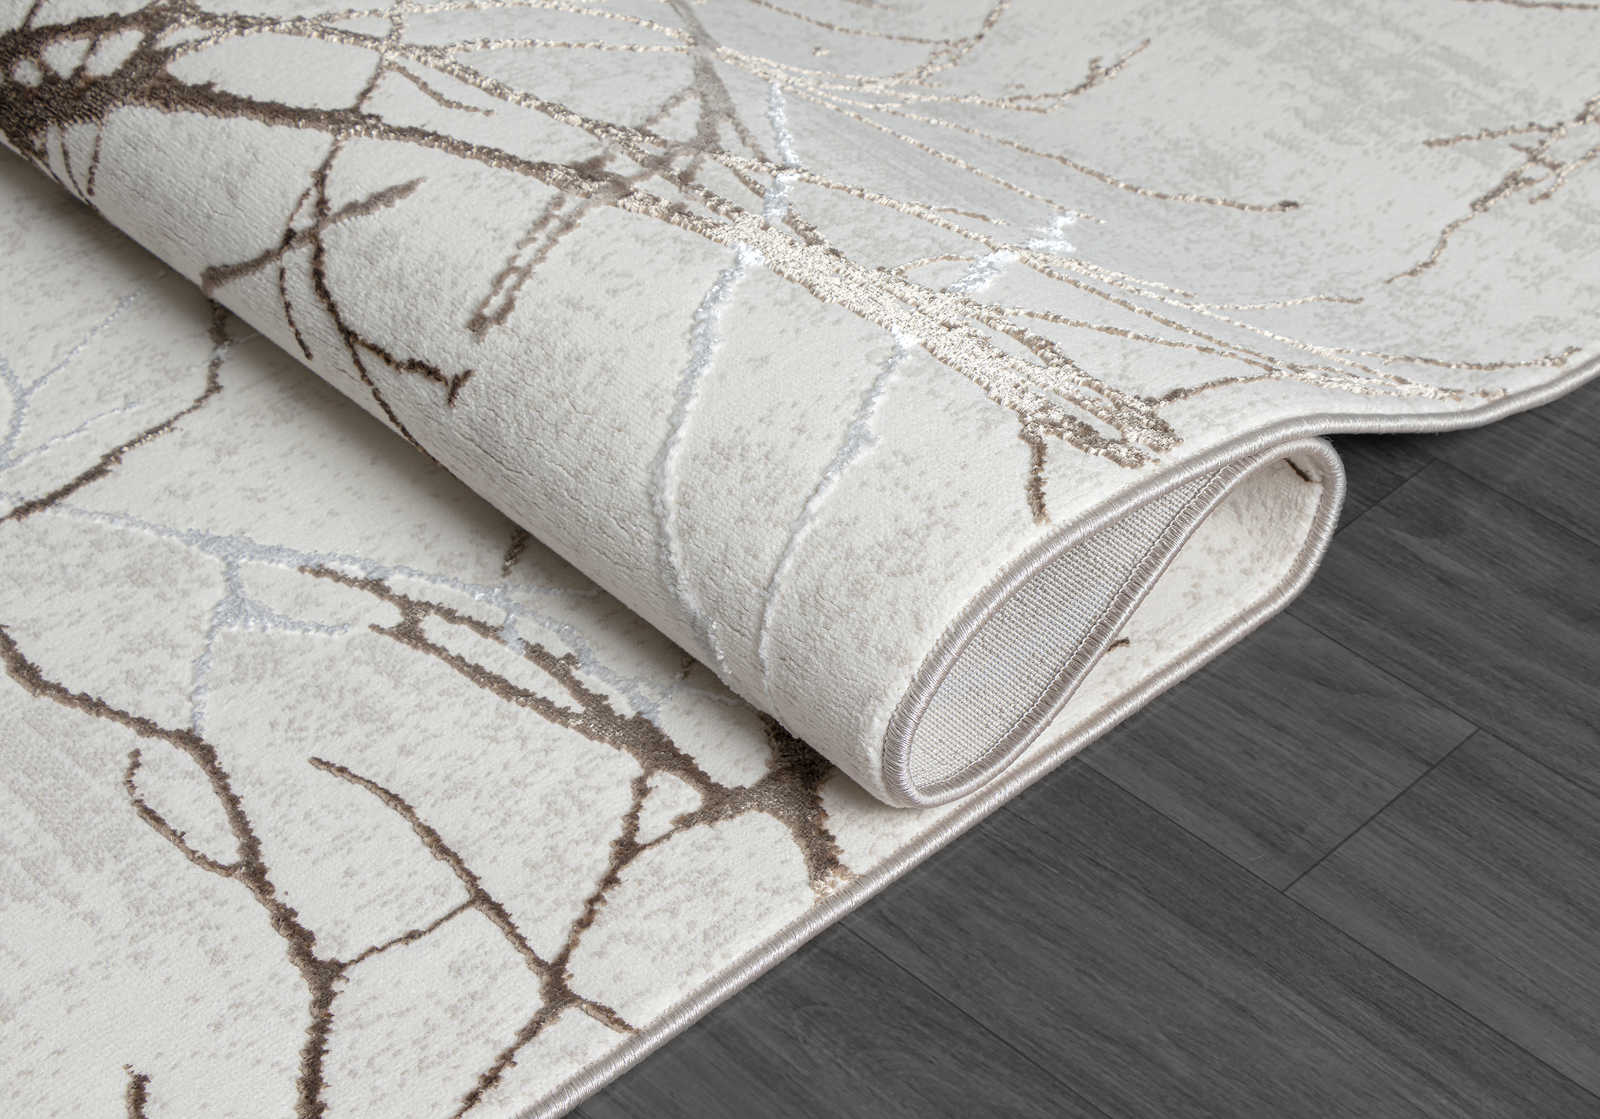             Pluizig hoogpolig tapijt in crème - 200 x 140 cm
        